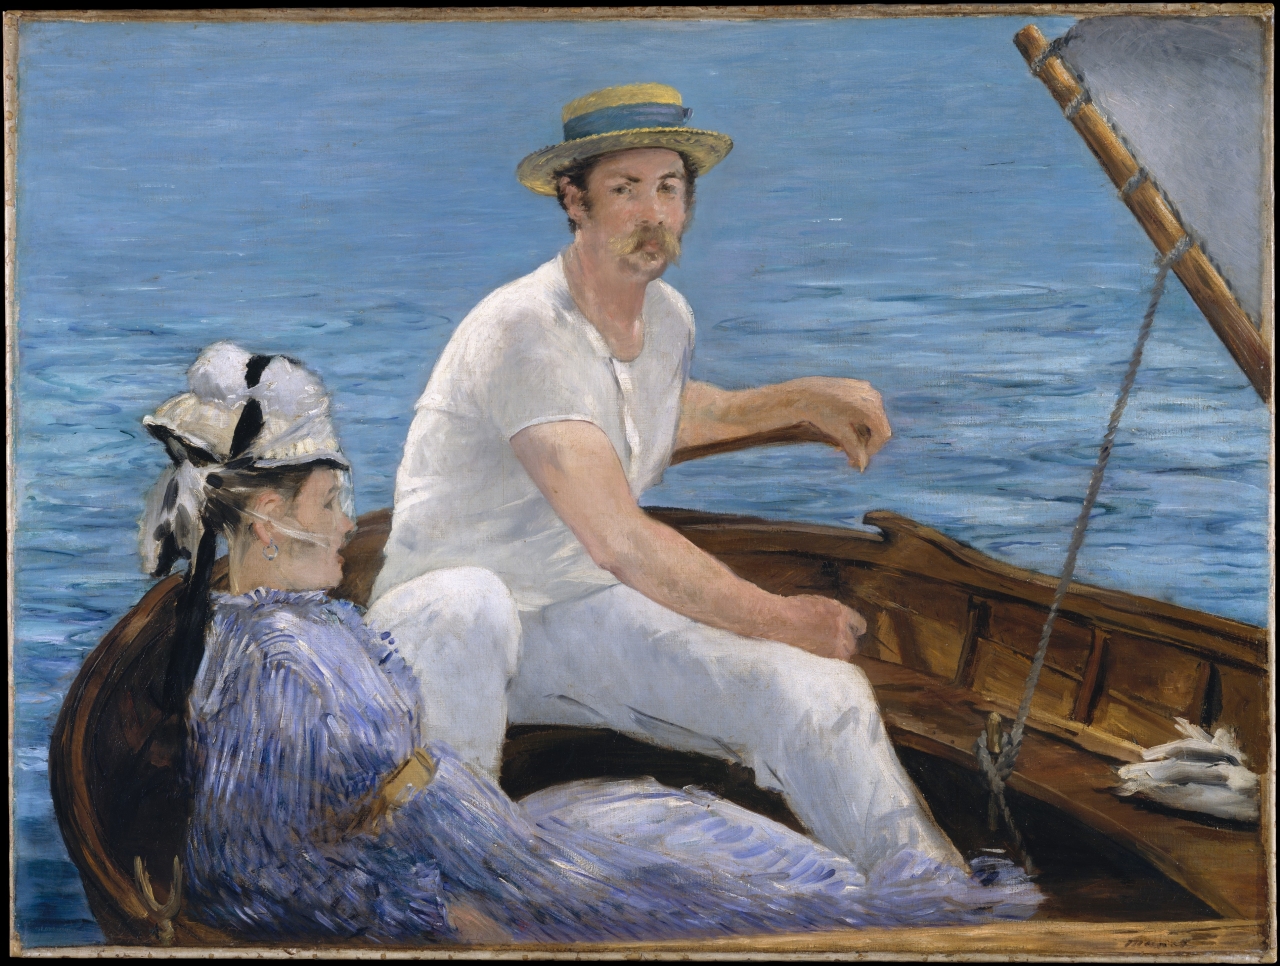 Edouard Manet(1832~1883), 'Boat', 1874, Oil on canvas, 97.2 x 130.2 cm, Metropolitan Museum of Art.